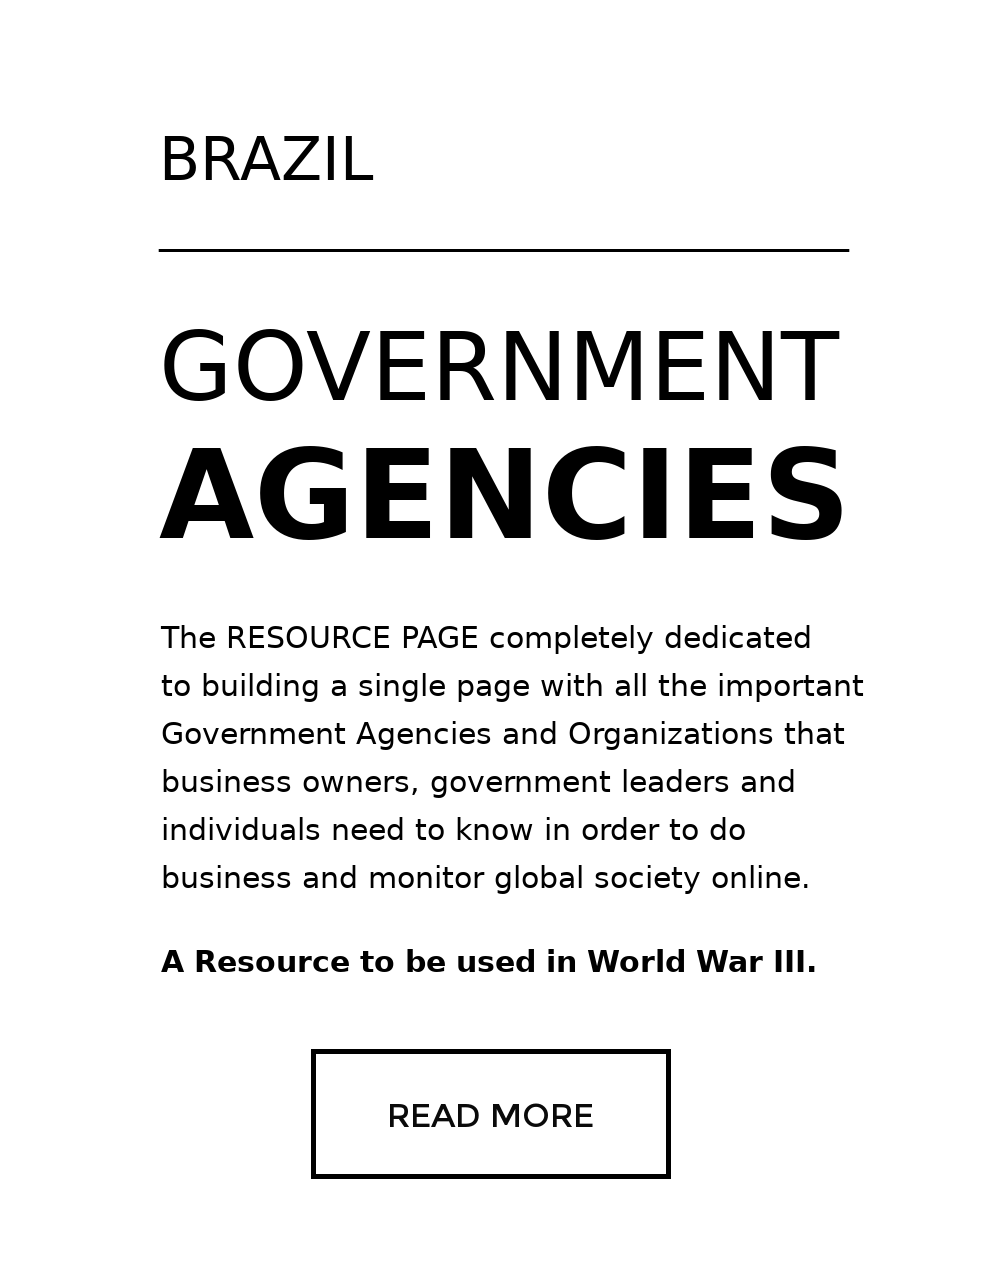 governments-worldwide-Brazil-card-v2